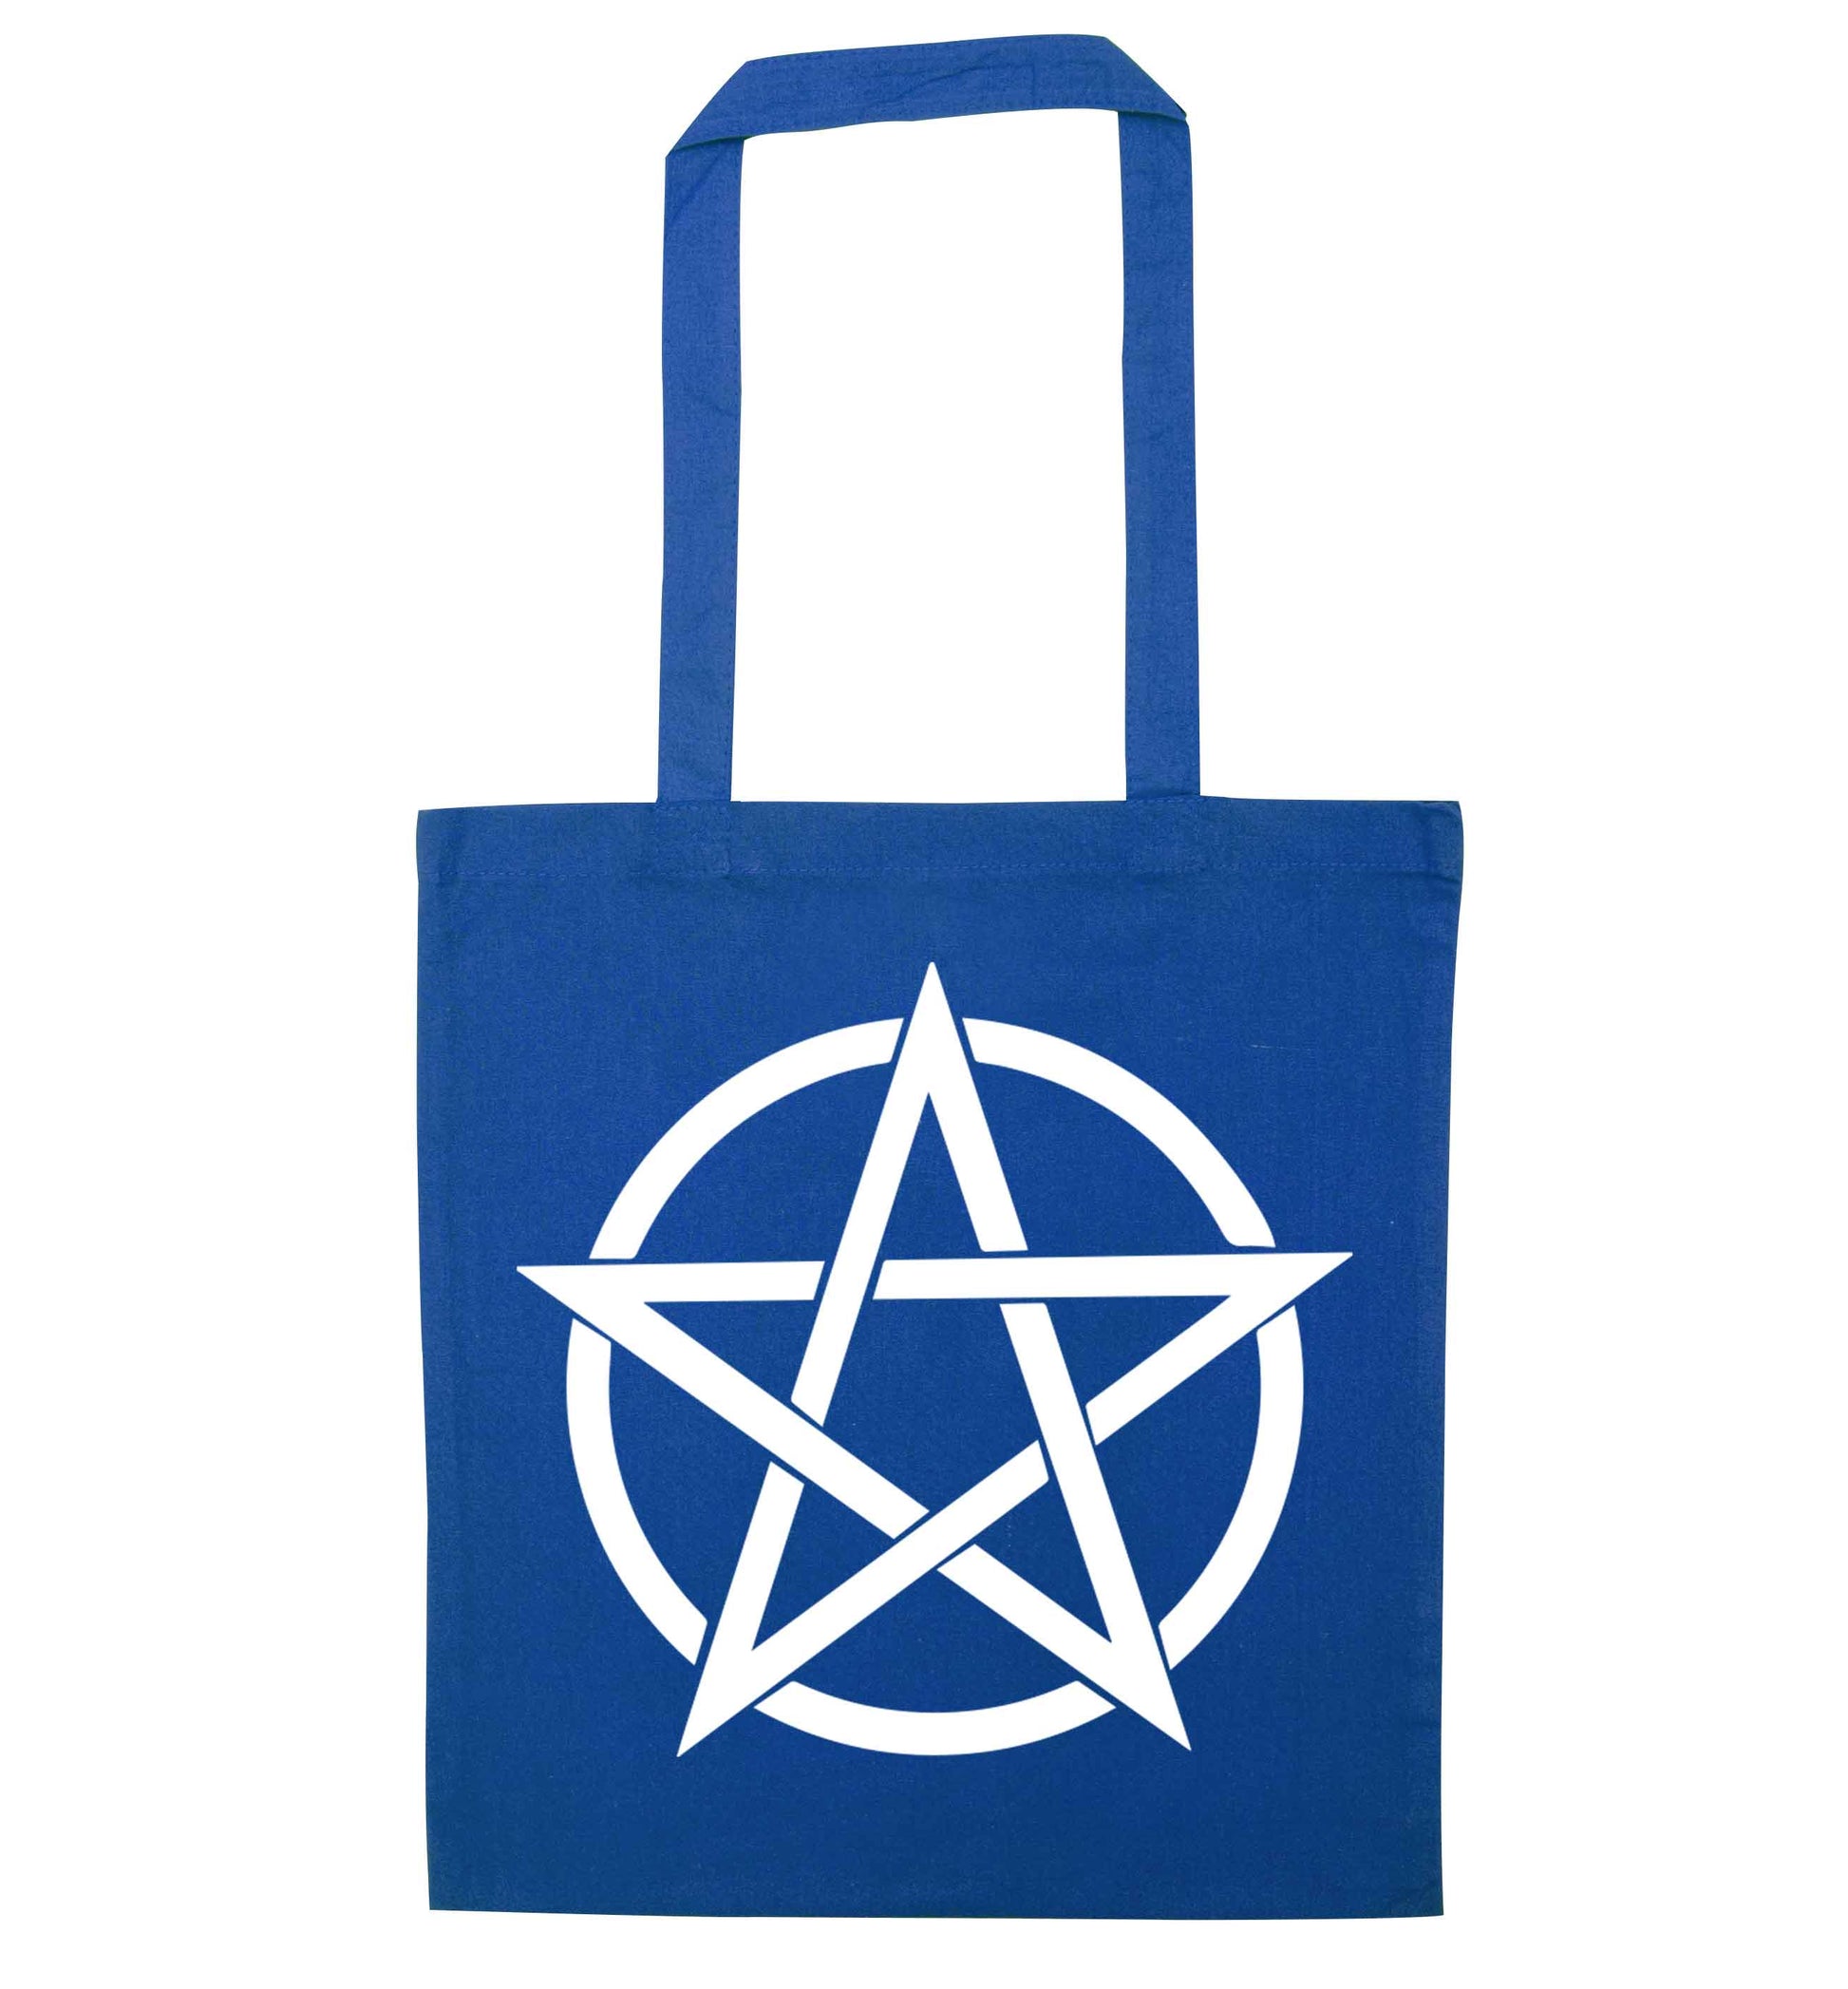 Pentagram symbol blue tote bag